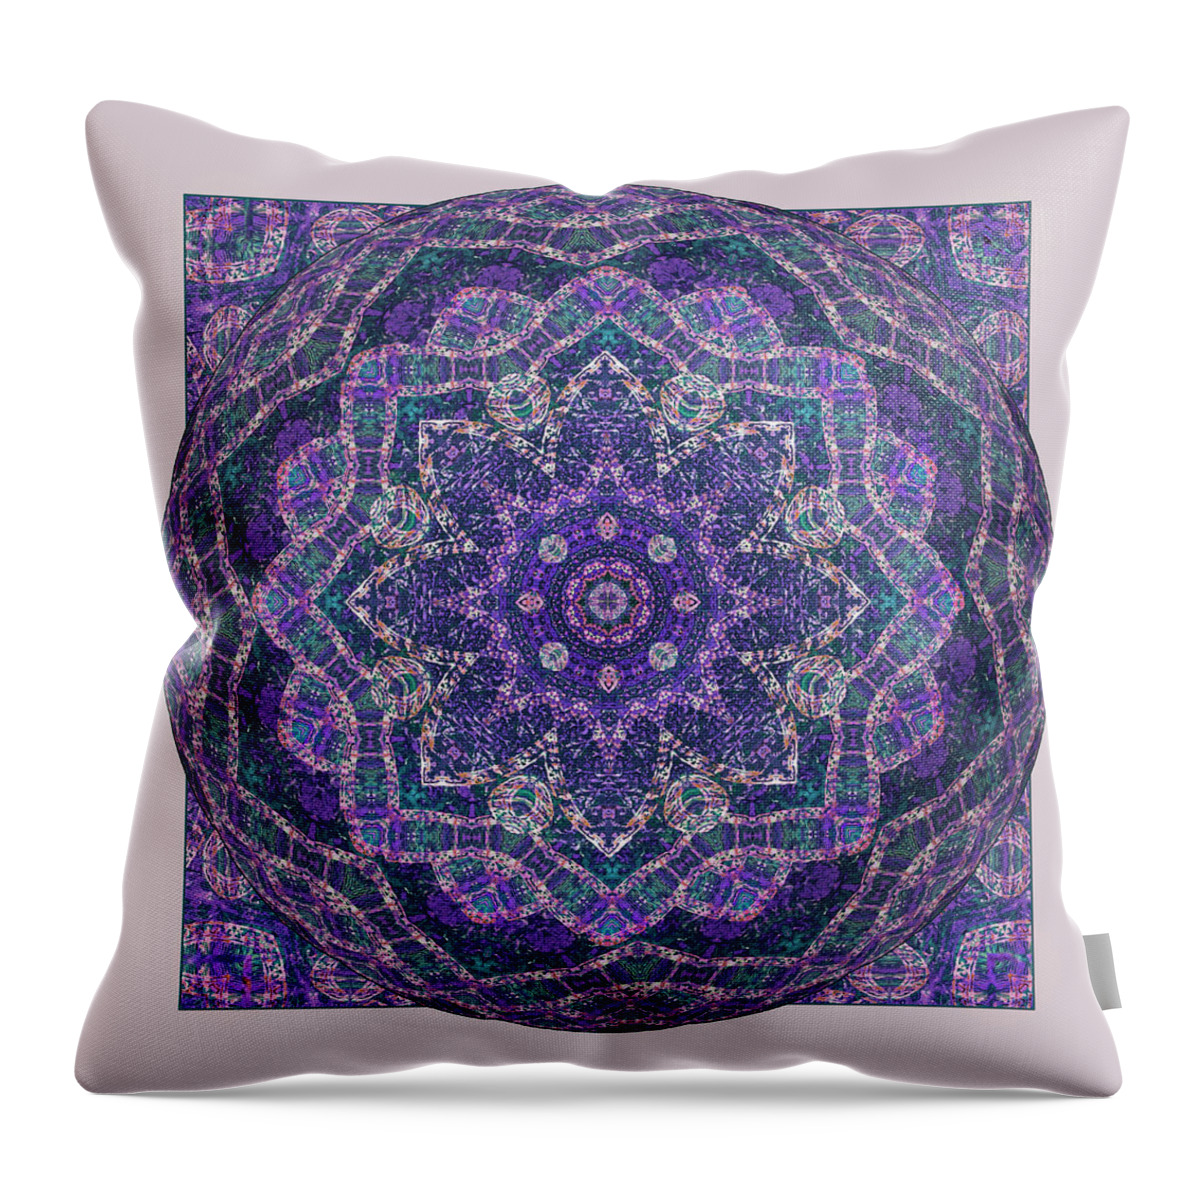 Batik Throw Pillow featuring the digital art Indigo Meditation by Deborah Smith